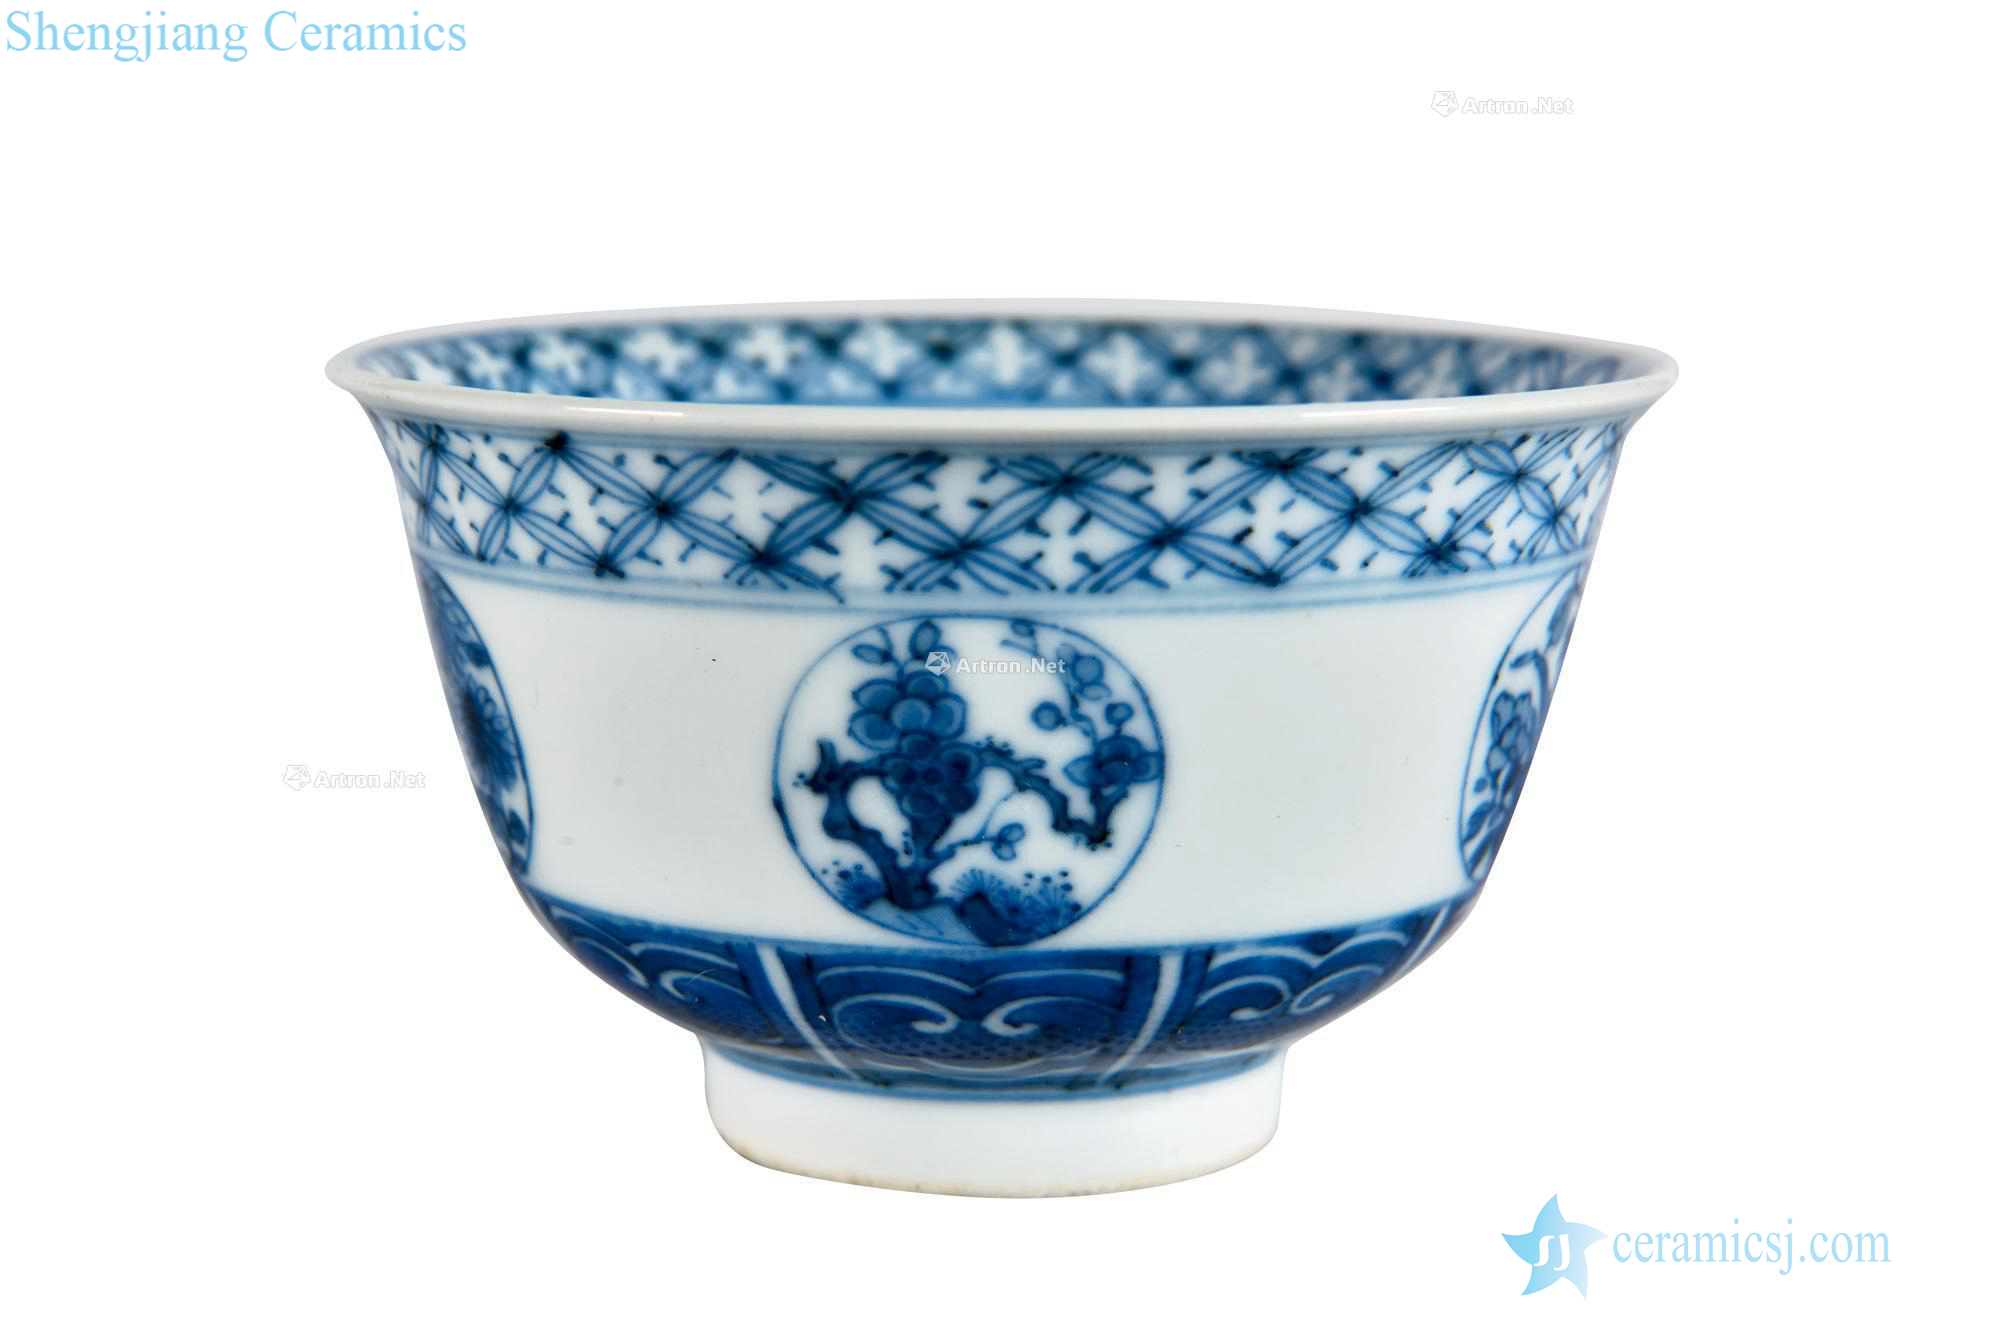 Qing porcelain medallion chrysanthemum patterns small bowl